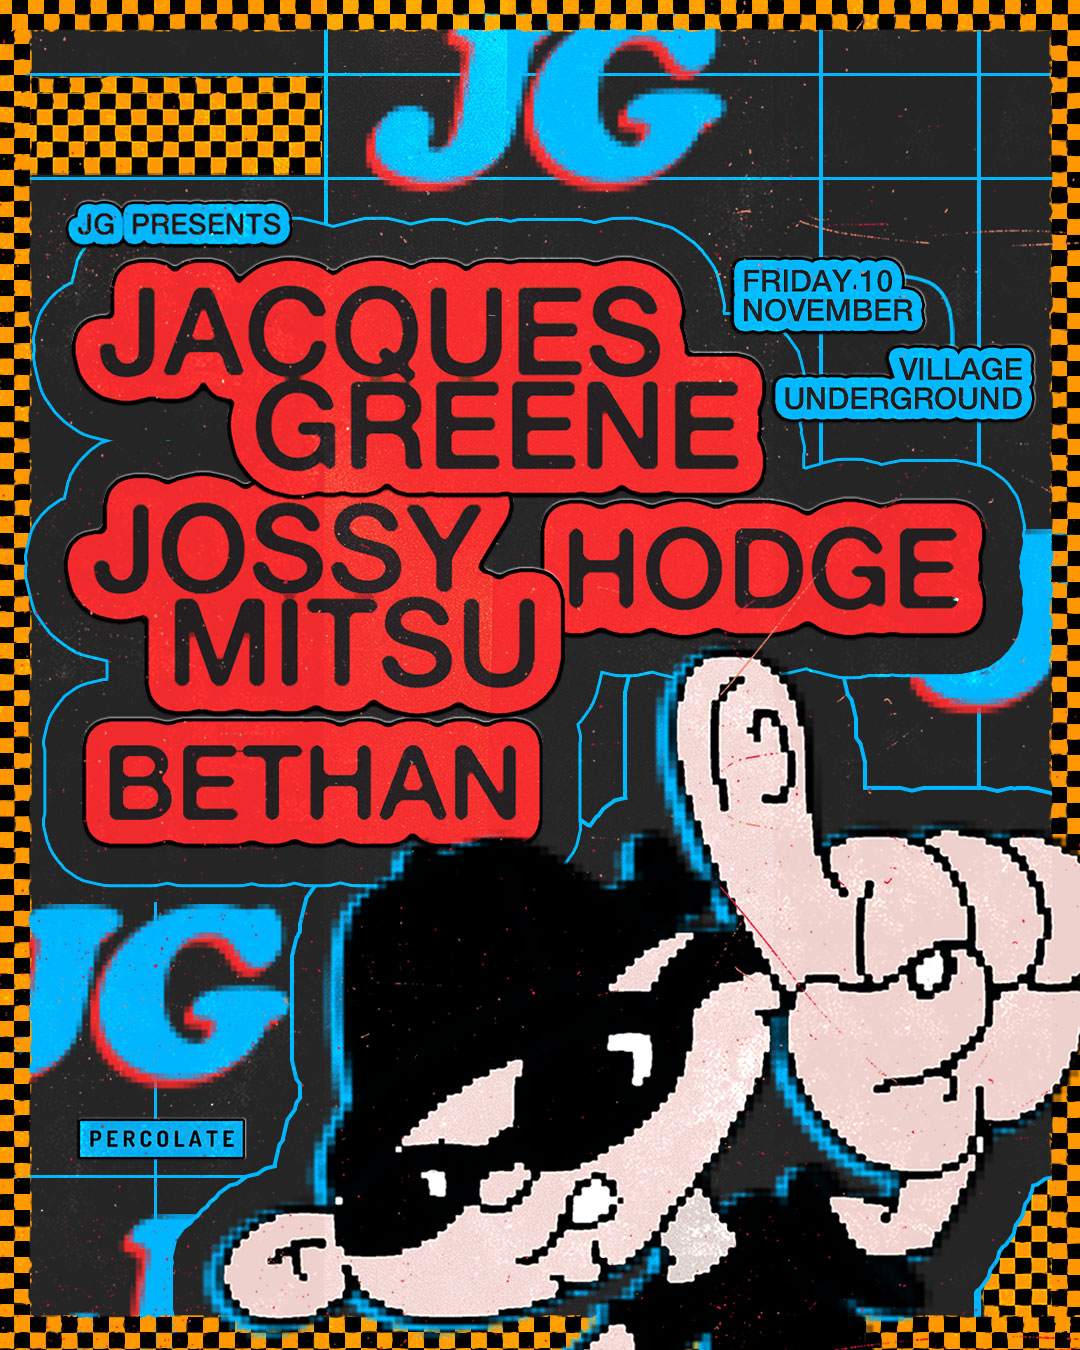 JG presents: Jacques Greene, Jossy Mitsu, Hodge, Bethan - フライヤー表